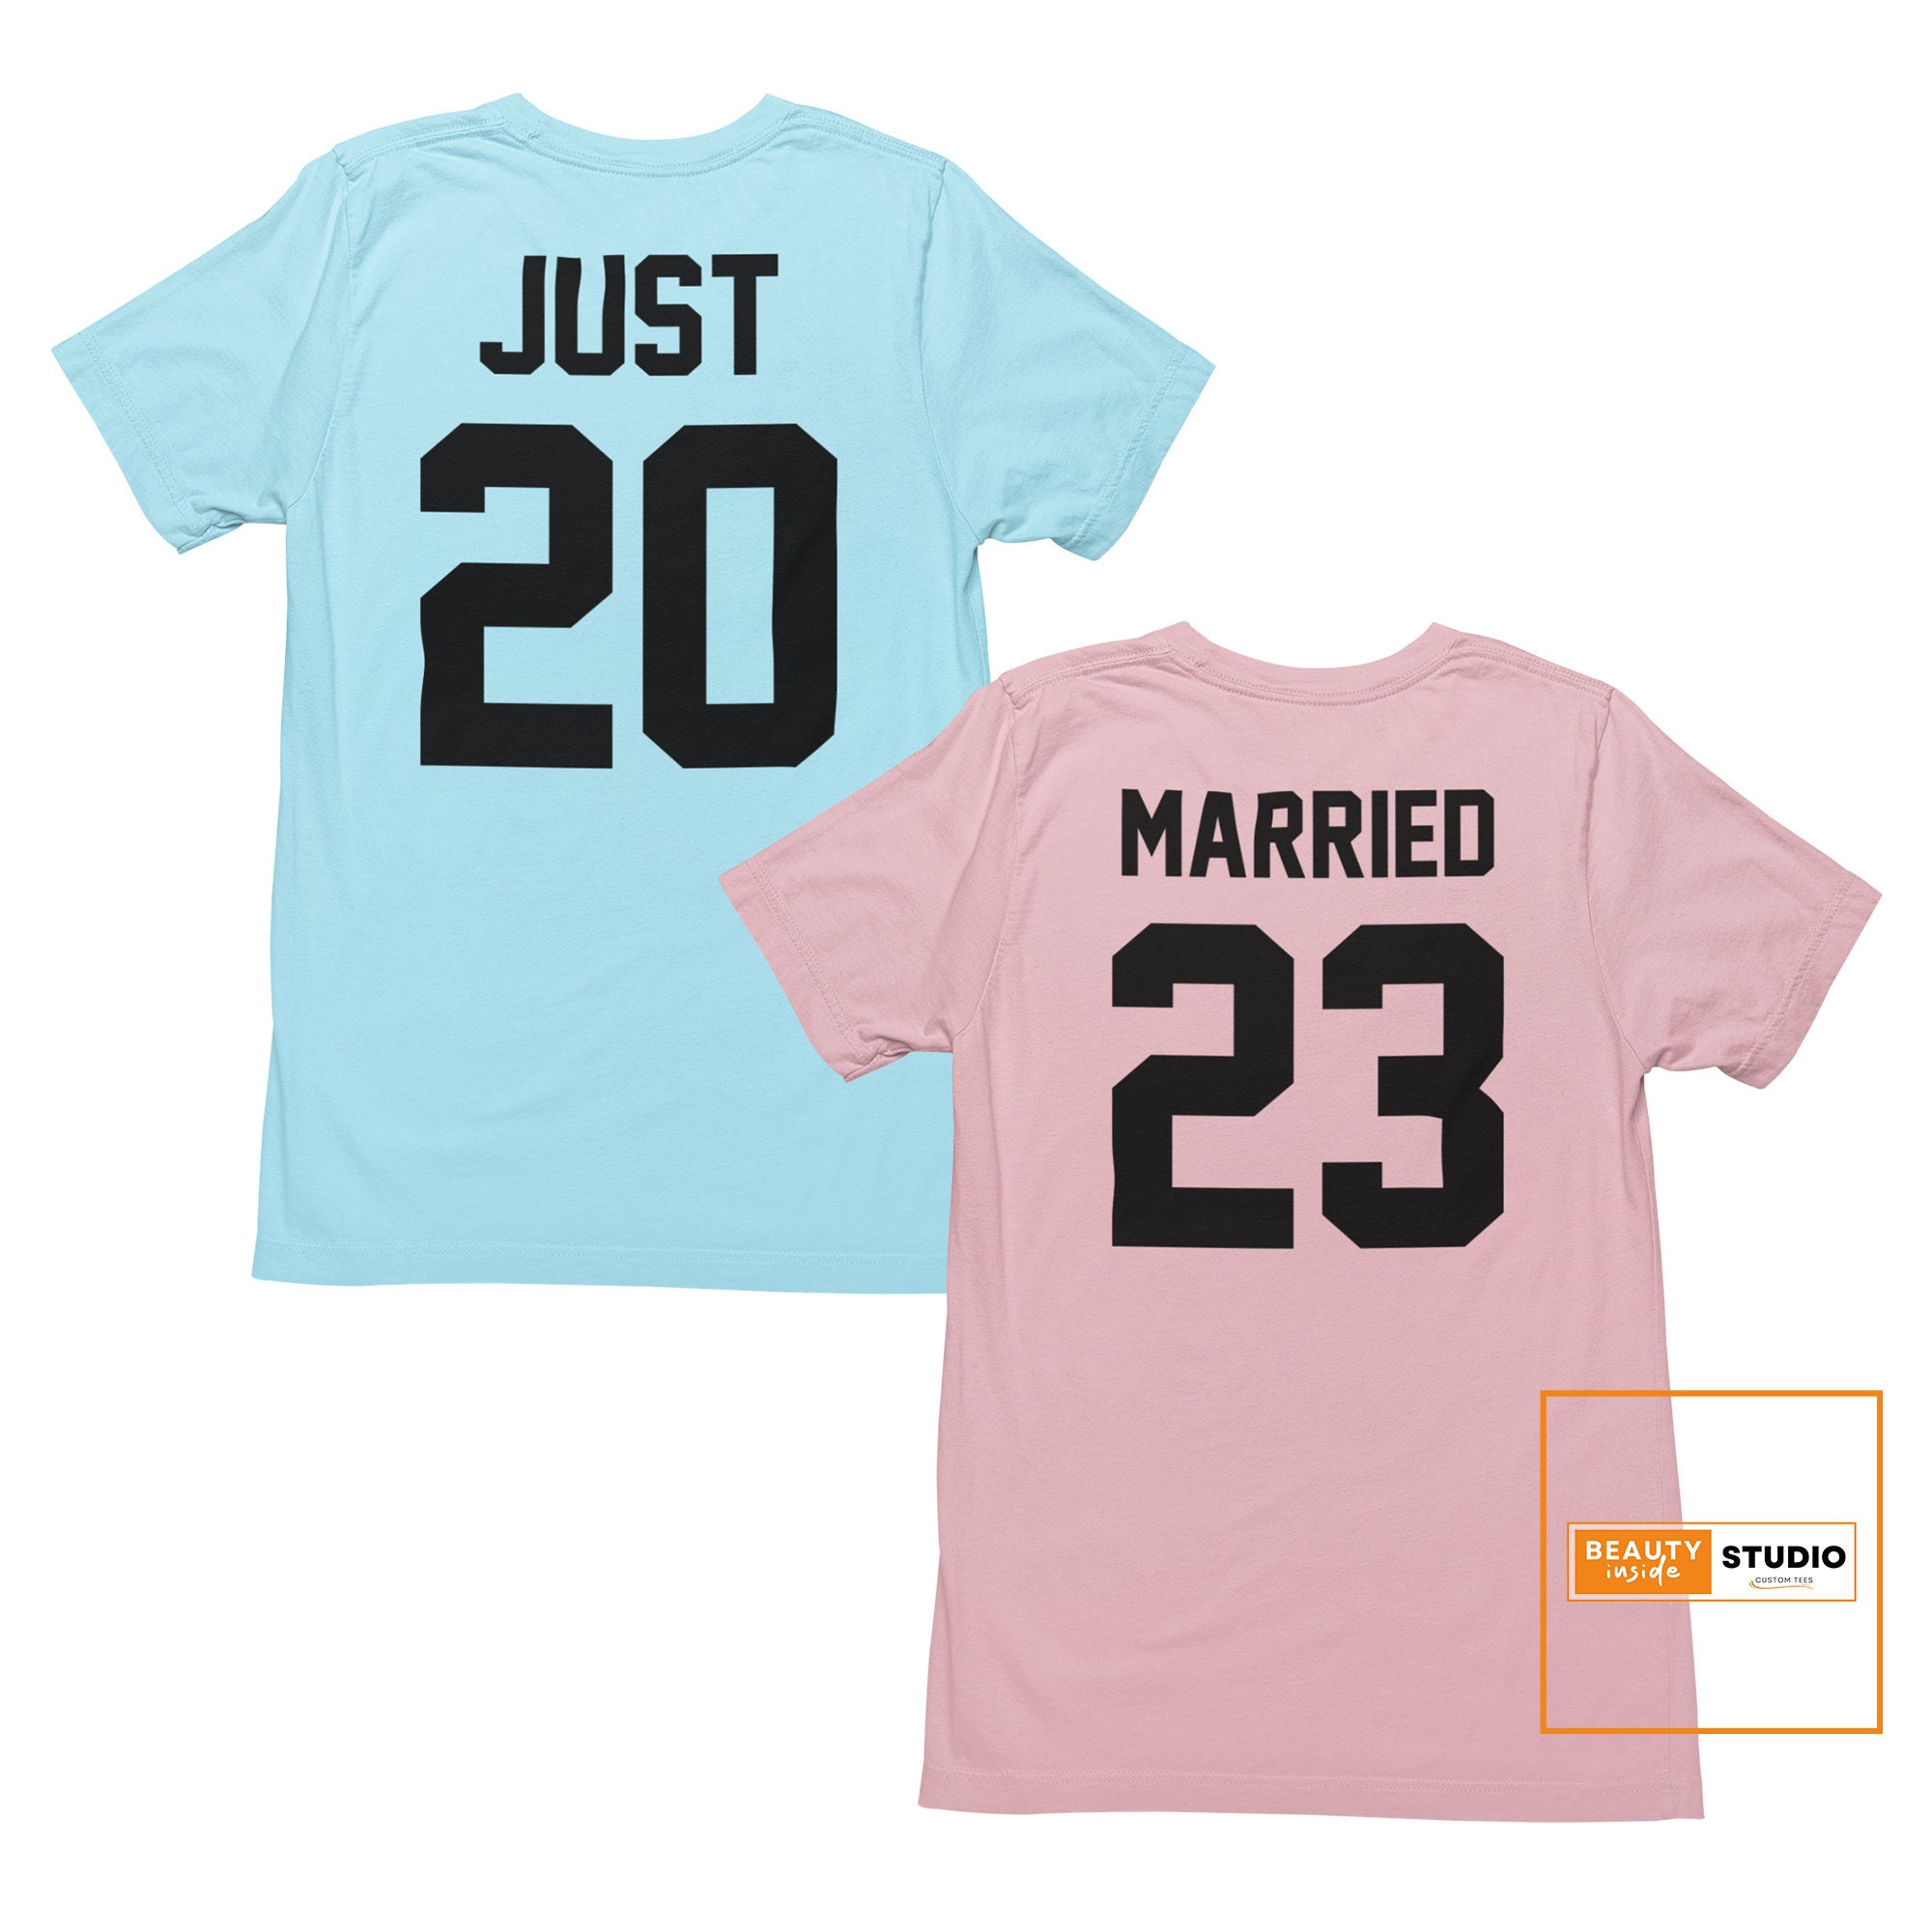 Honeymoon Shirt, Newlywed Gift, Engagement Gift, Bridal Show - Inspire  Uplift